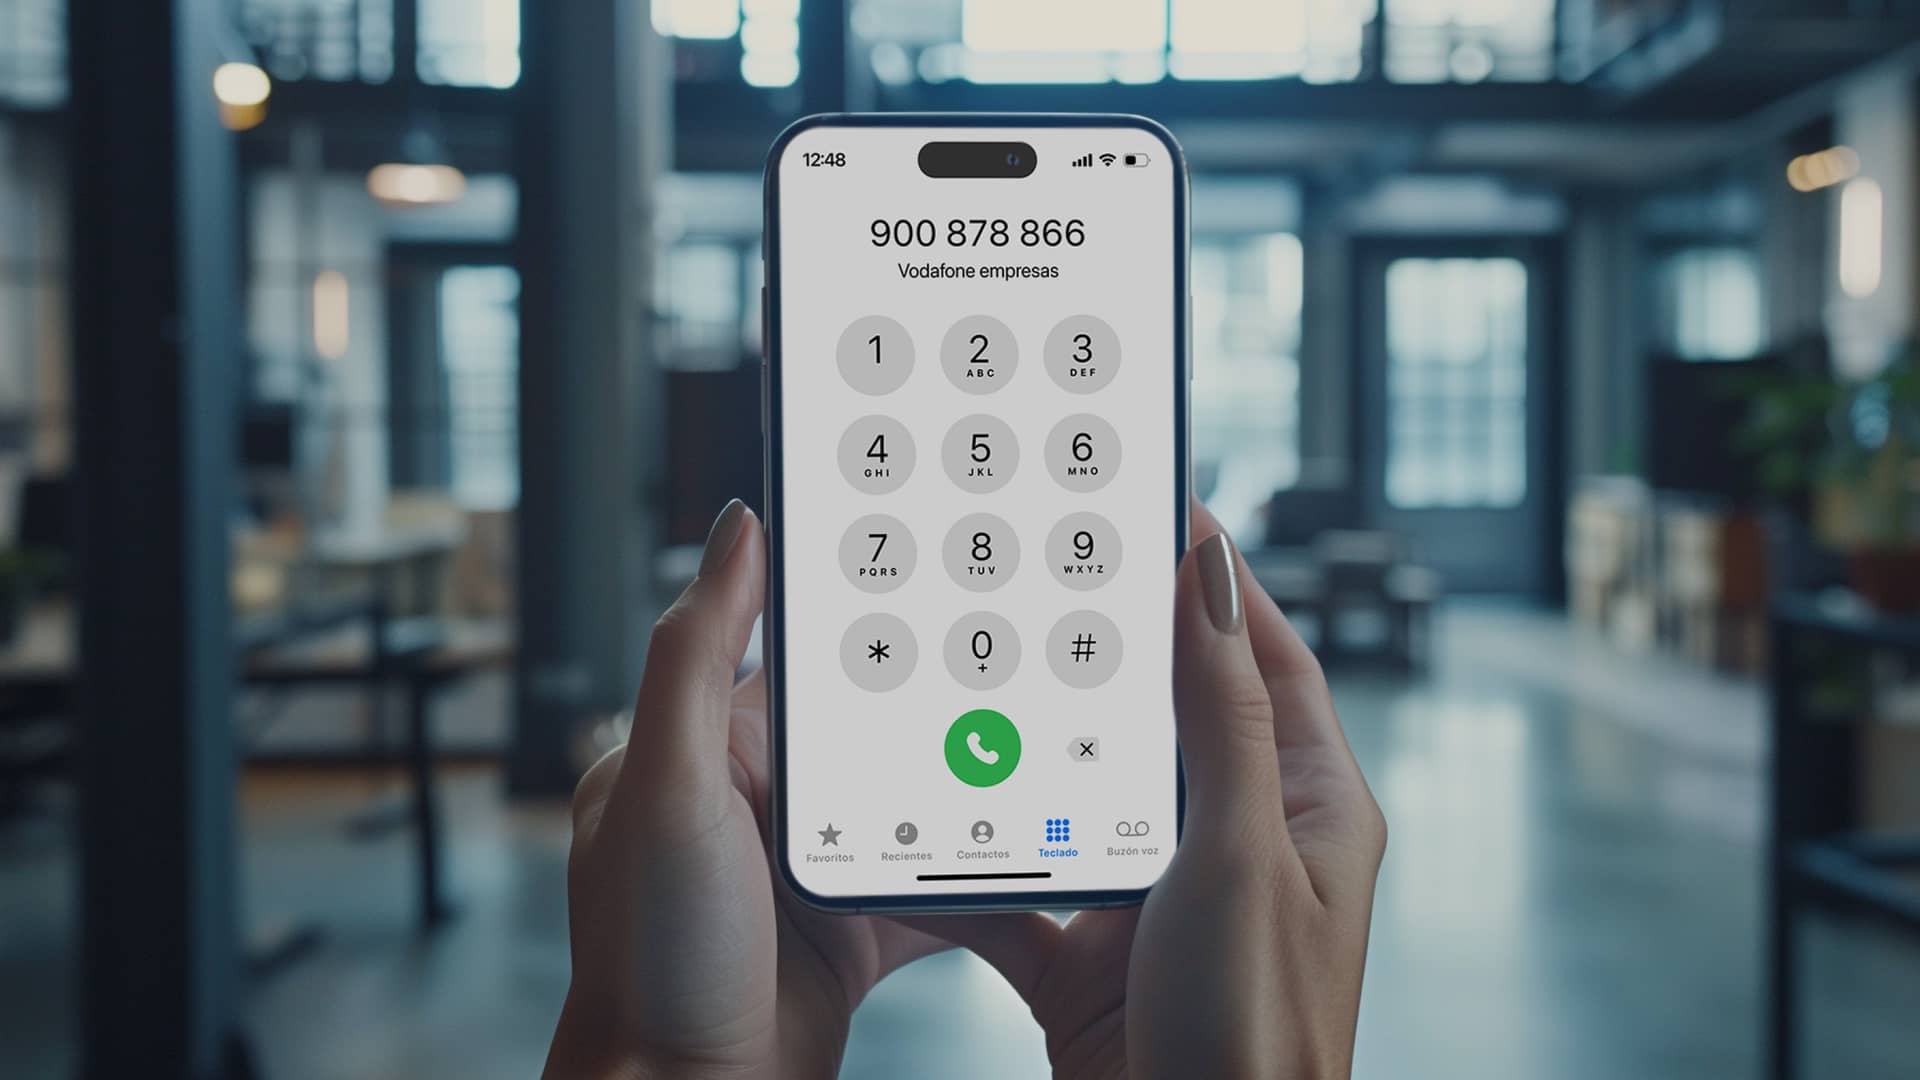 Vodafone Empresas: teléfono de atención al cliente | Septiembre 2022